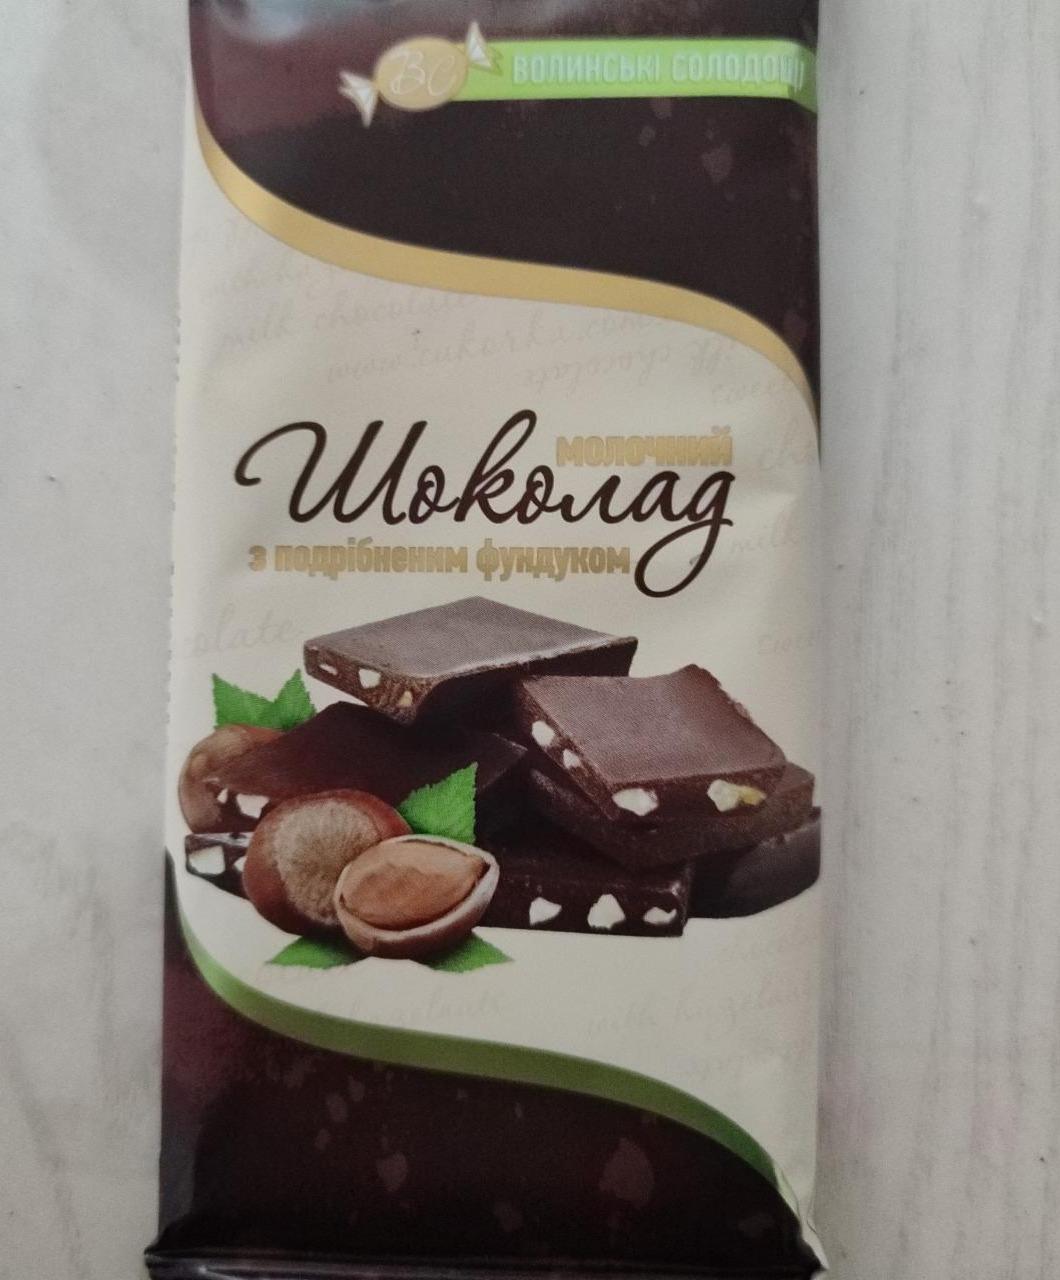 Фото - Шоколад молочный с дробленным фундуком Волинські солодощі